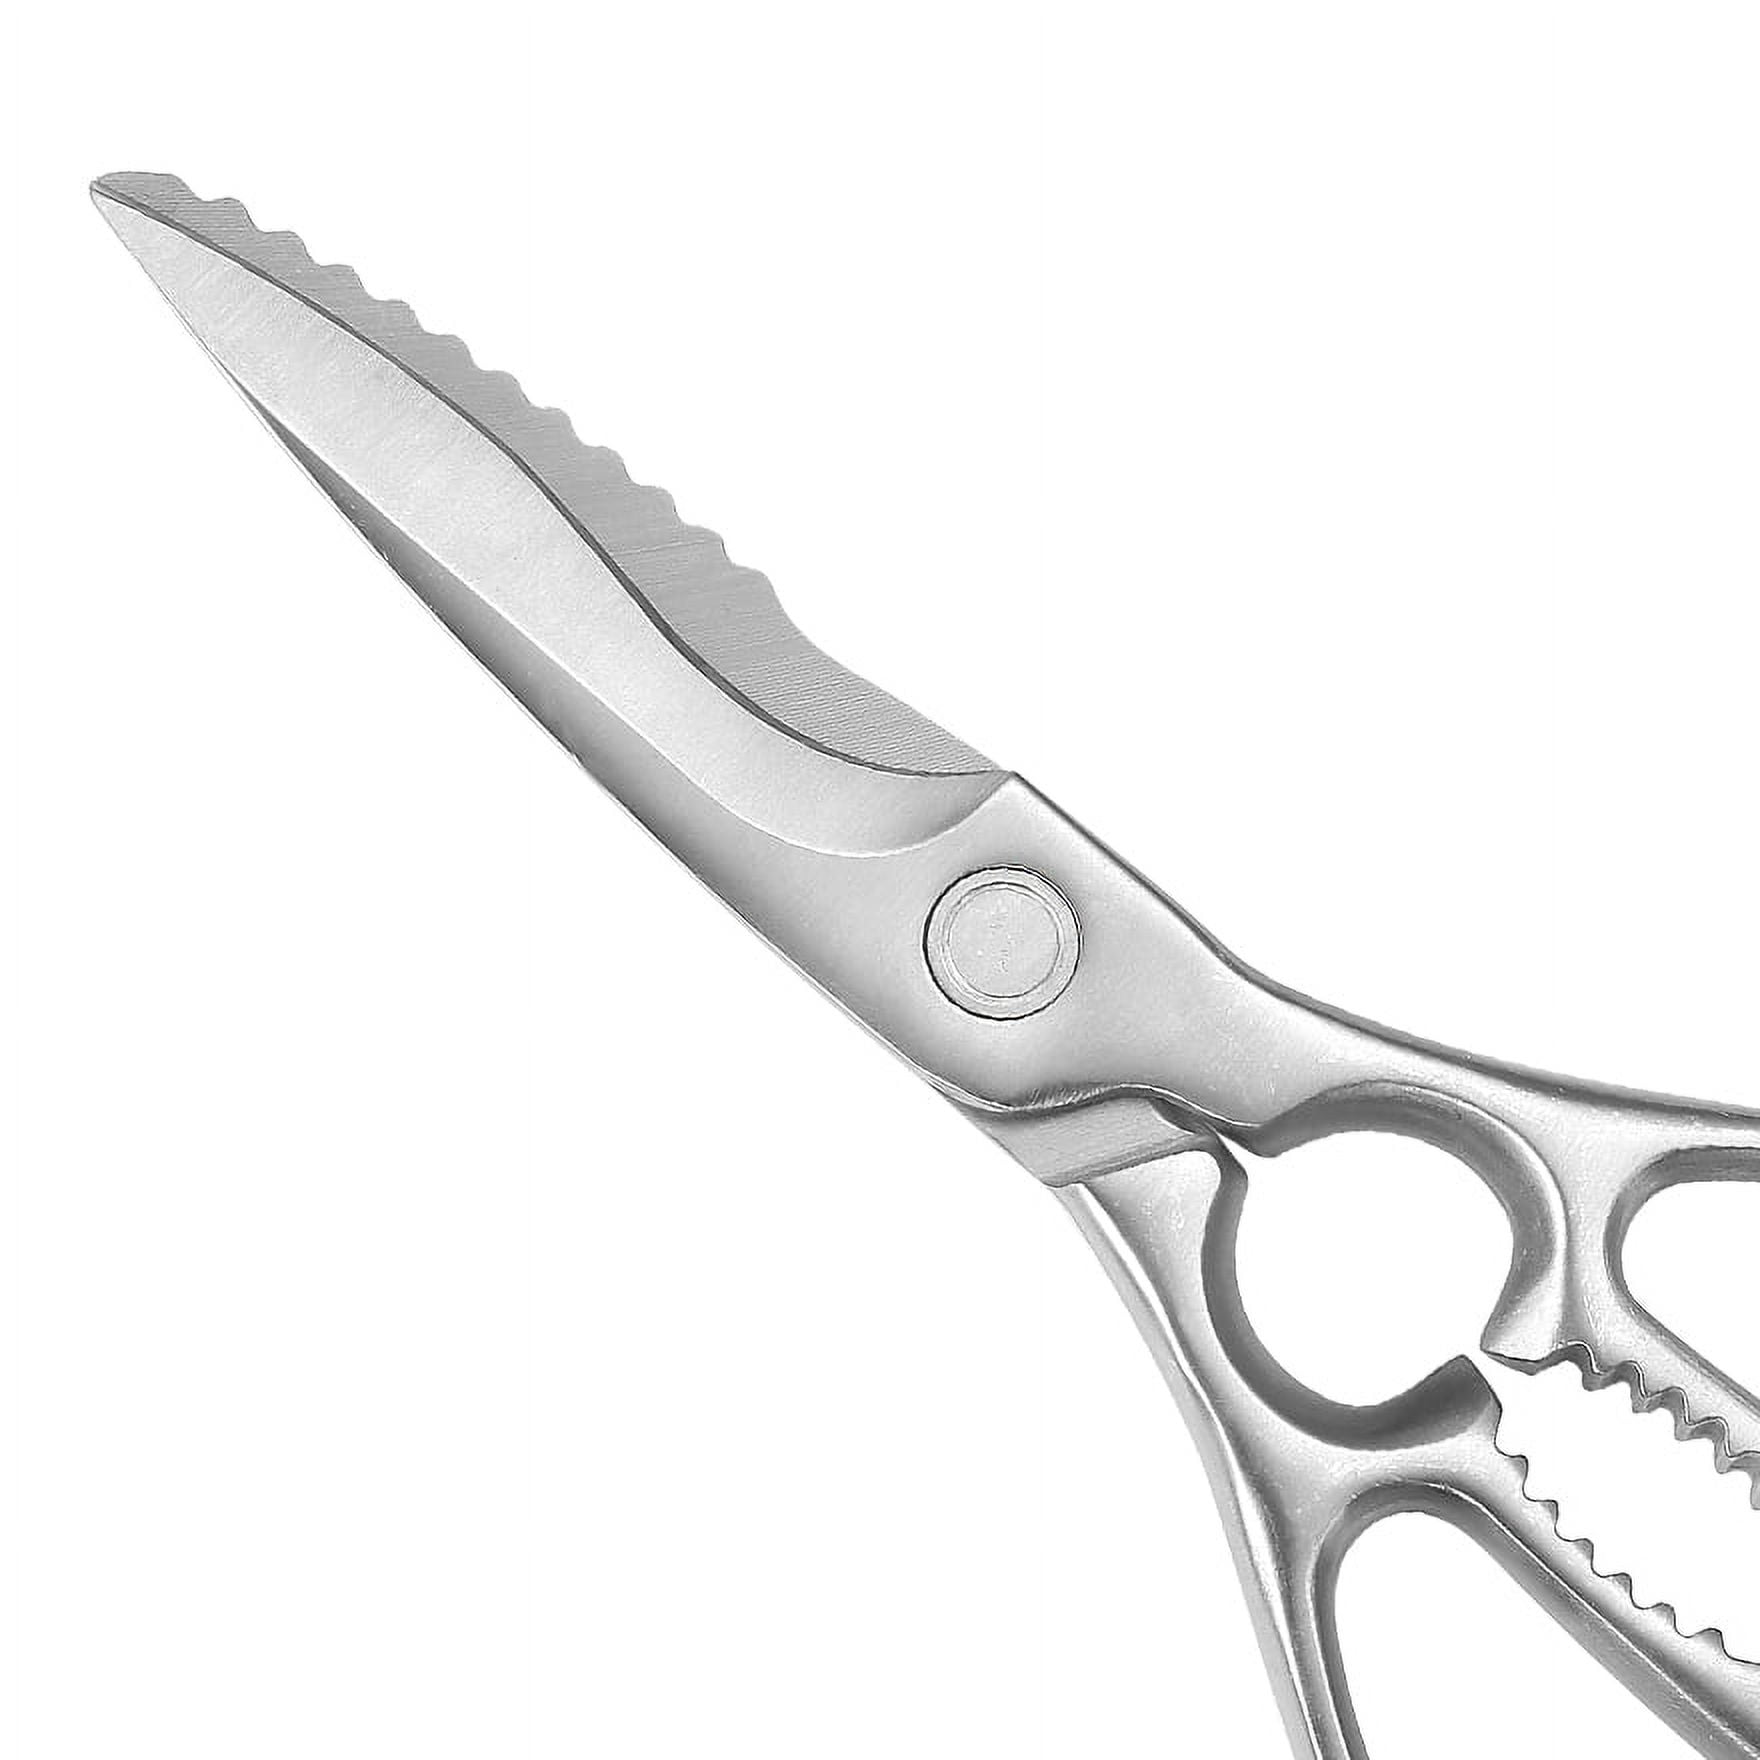 Professional kitchen Scissors Stainless Steel – Vital Industries